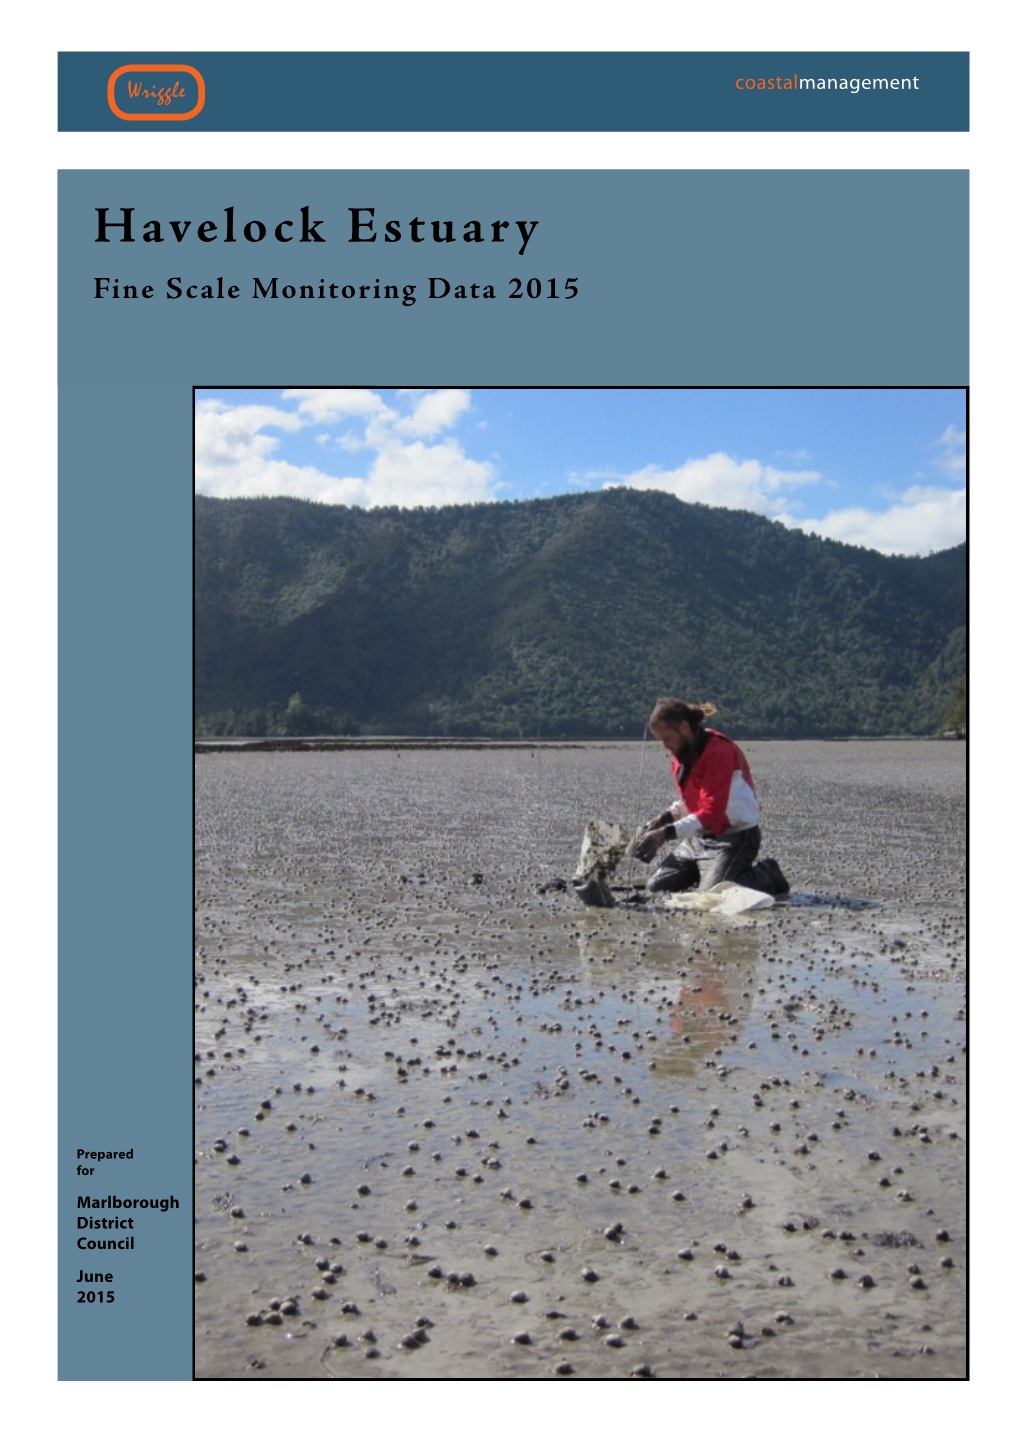 Havelock Estuary Fine Scale Monitoring Data 2015